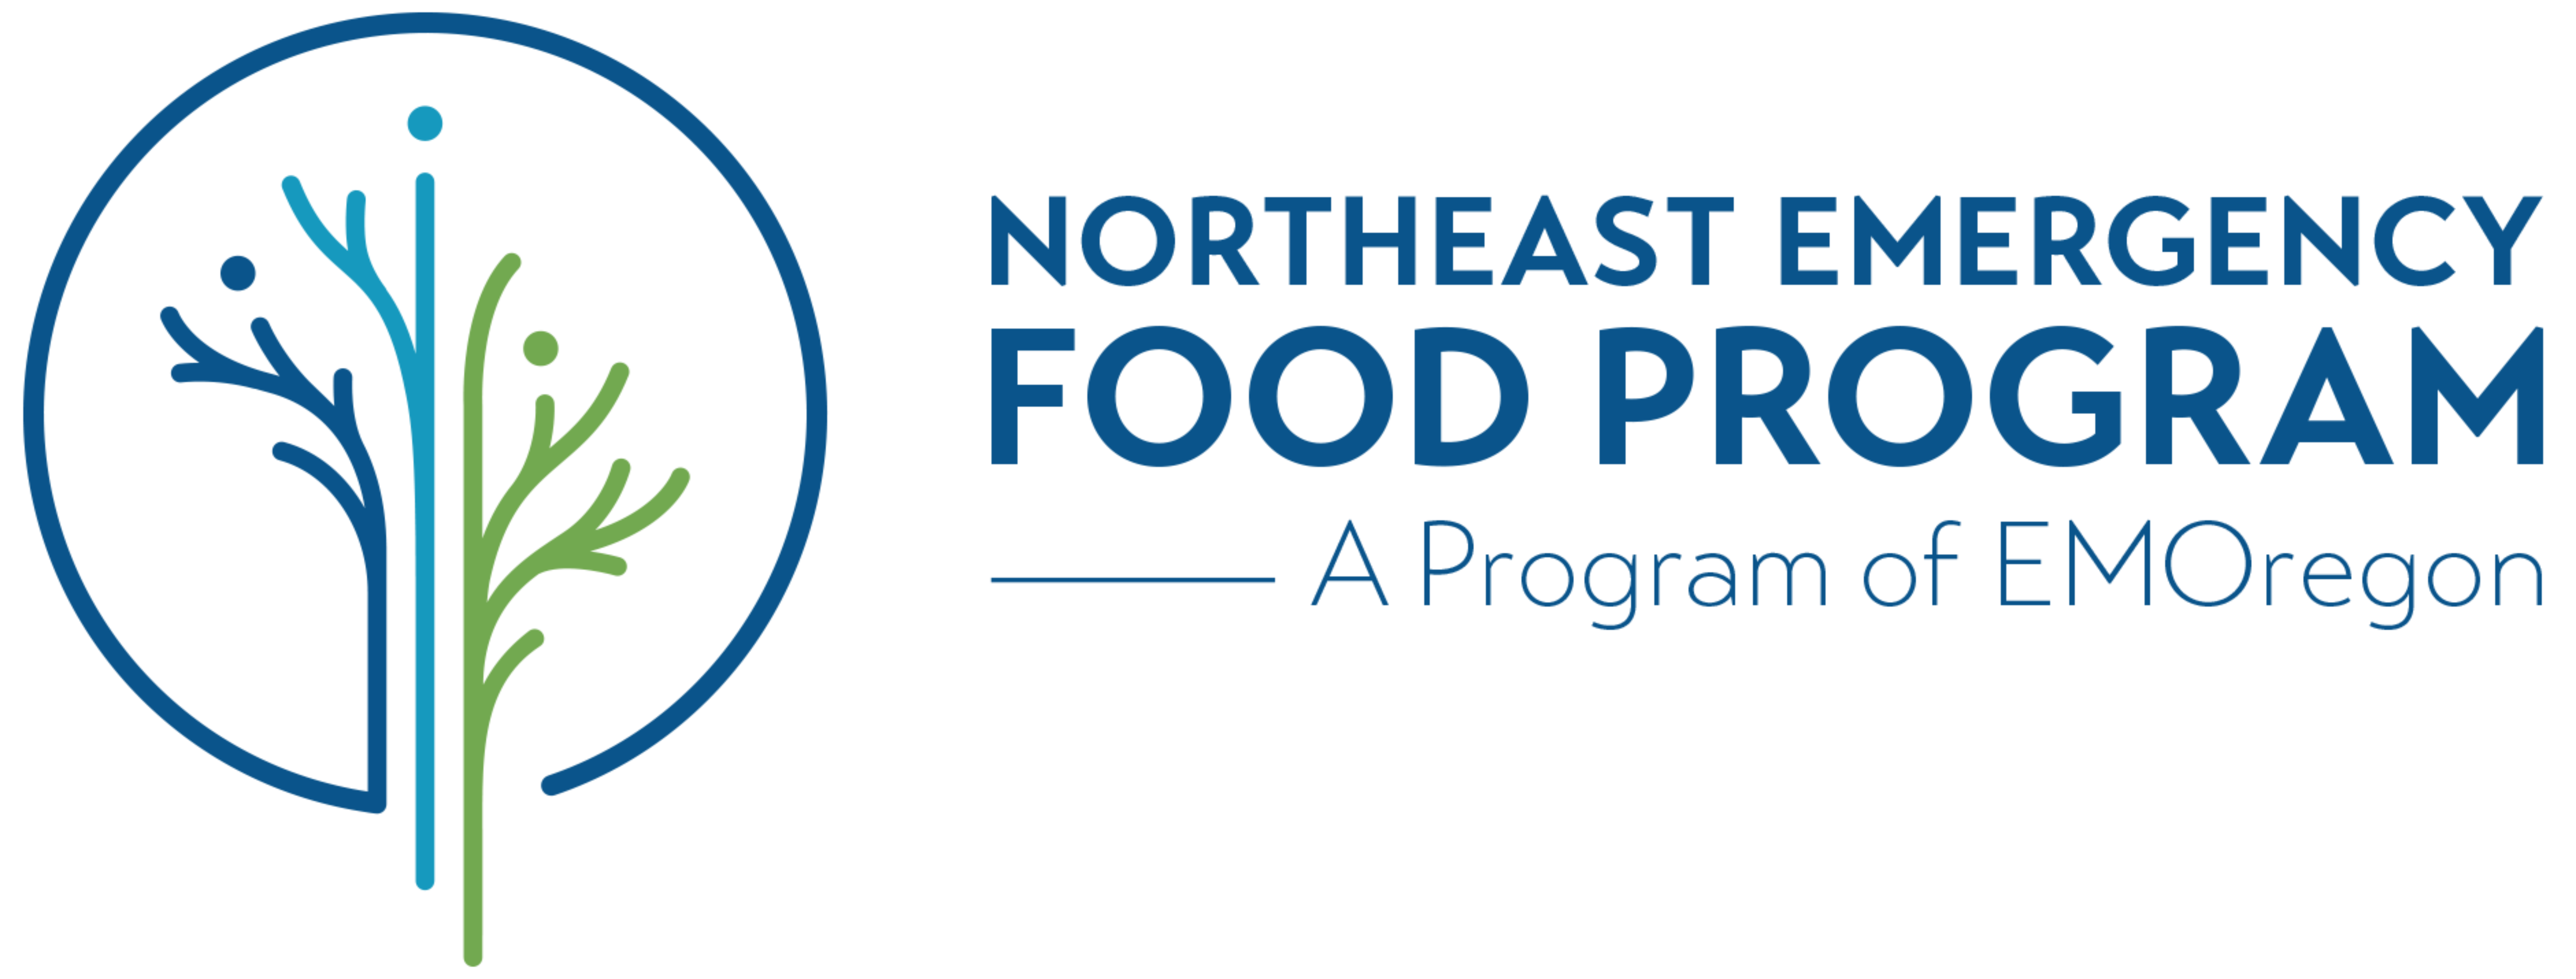 Northeast Emergency Food Program